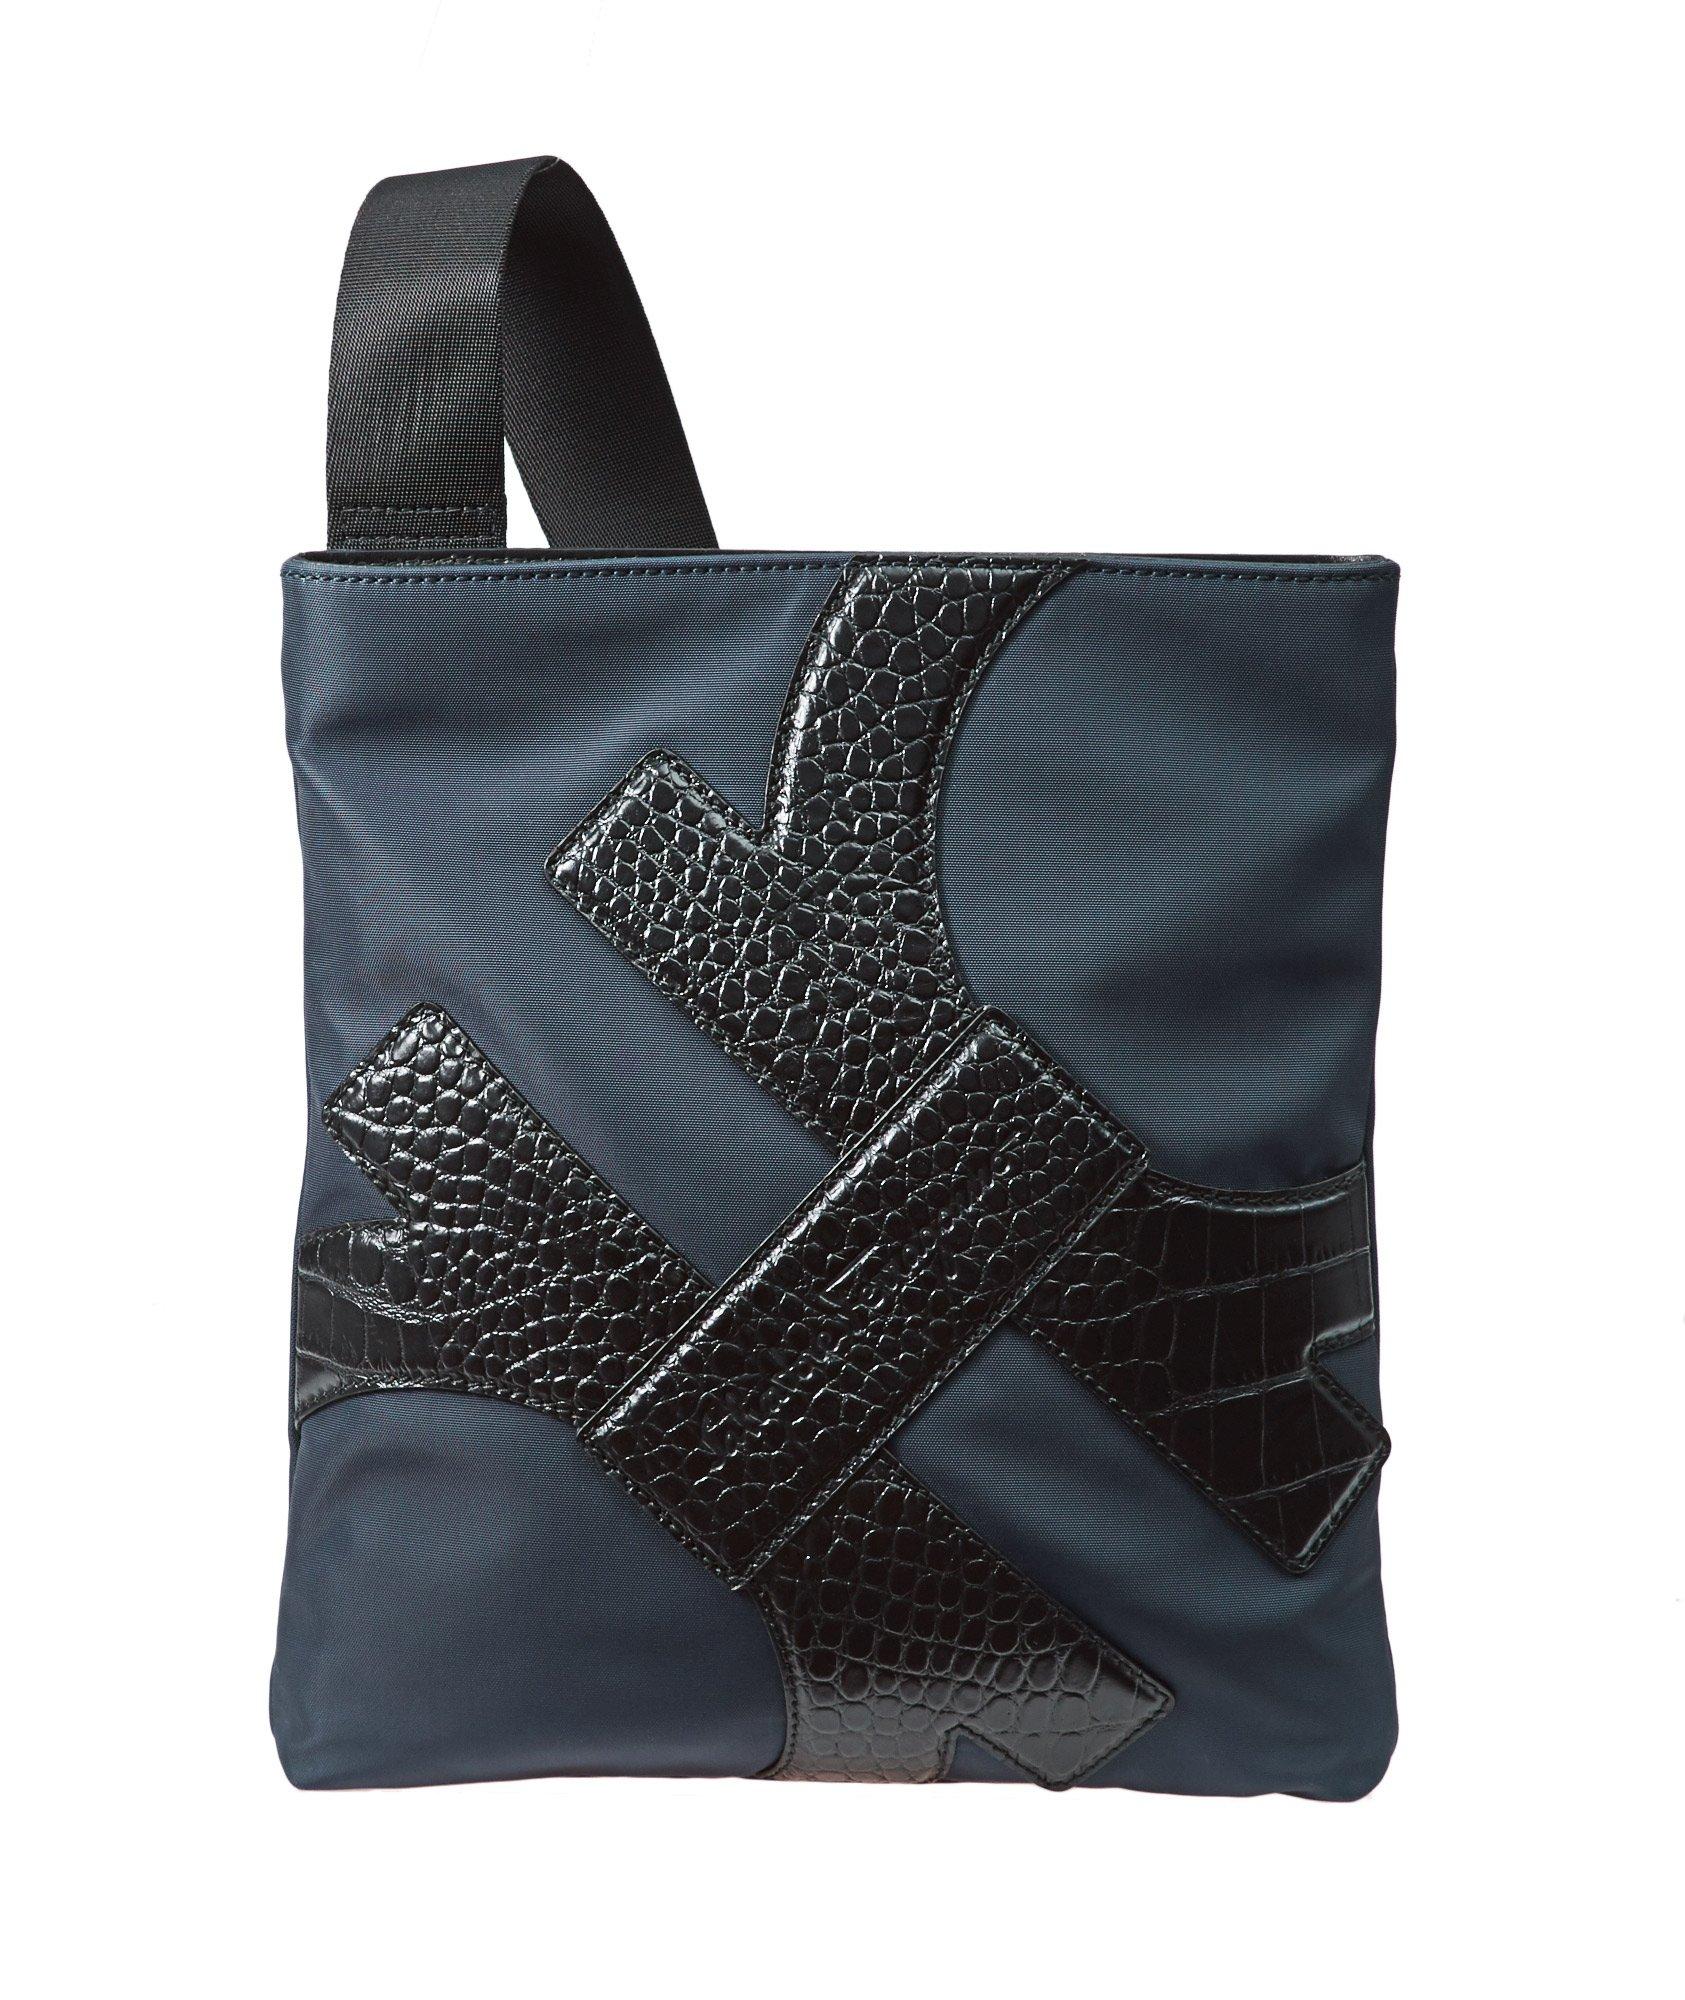 Leather & Nylon Messenger Bag image 0